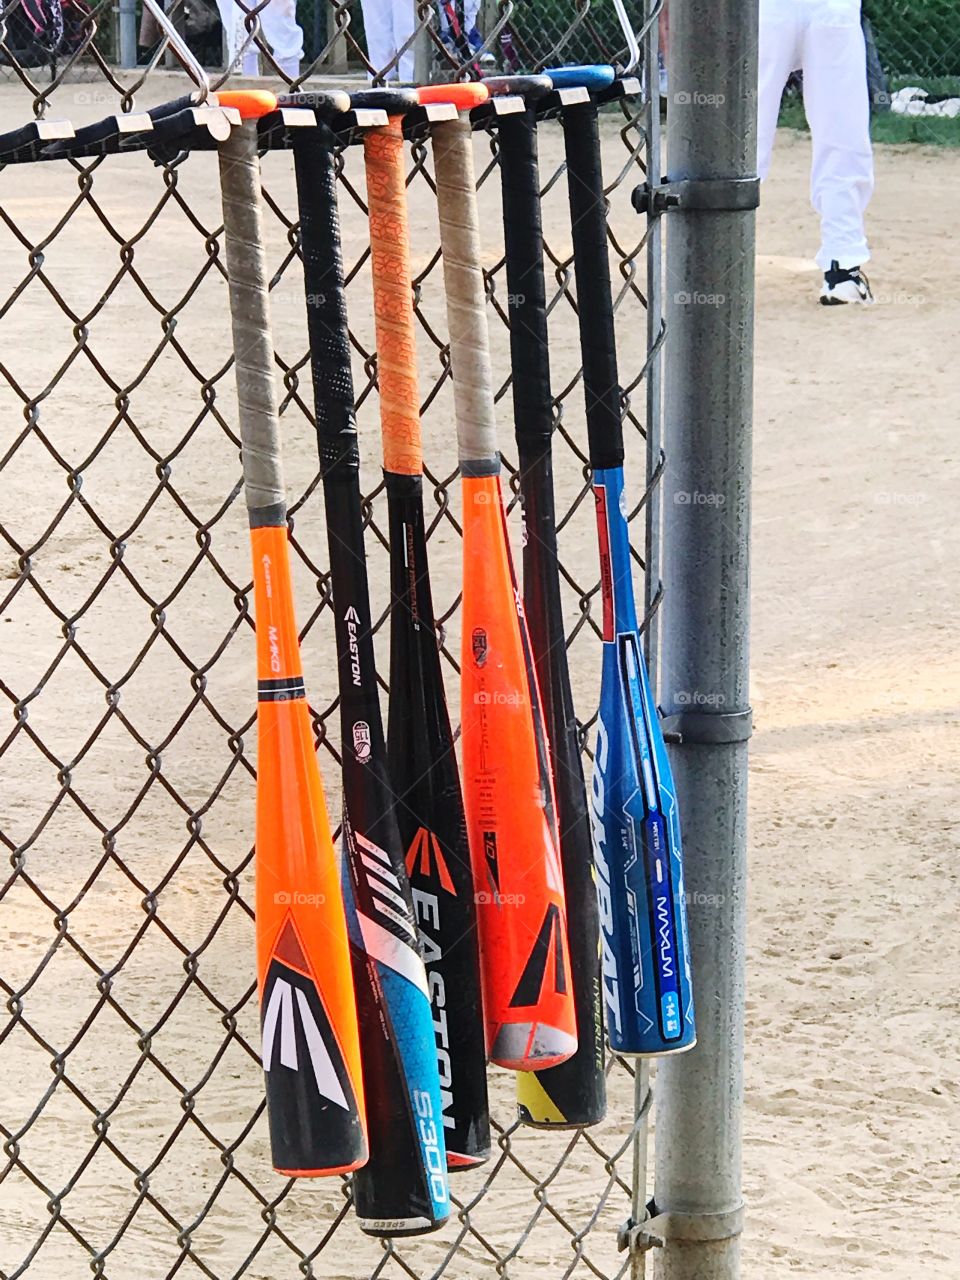 Row of baseball bats